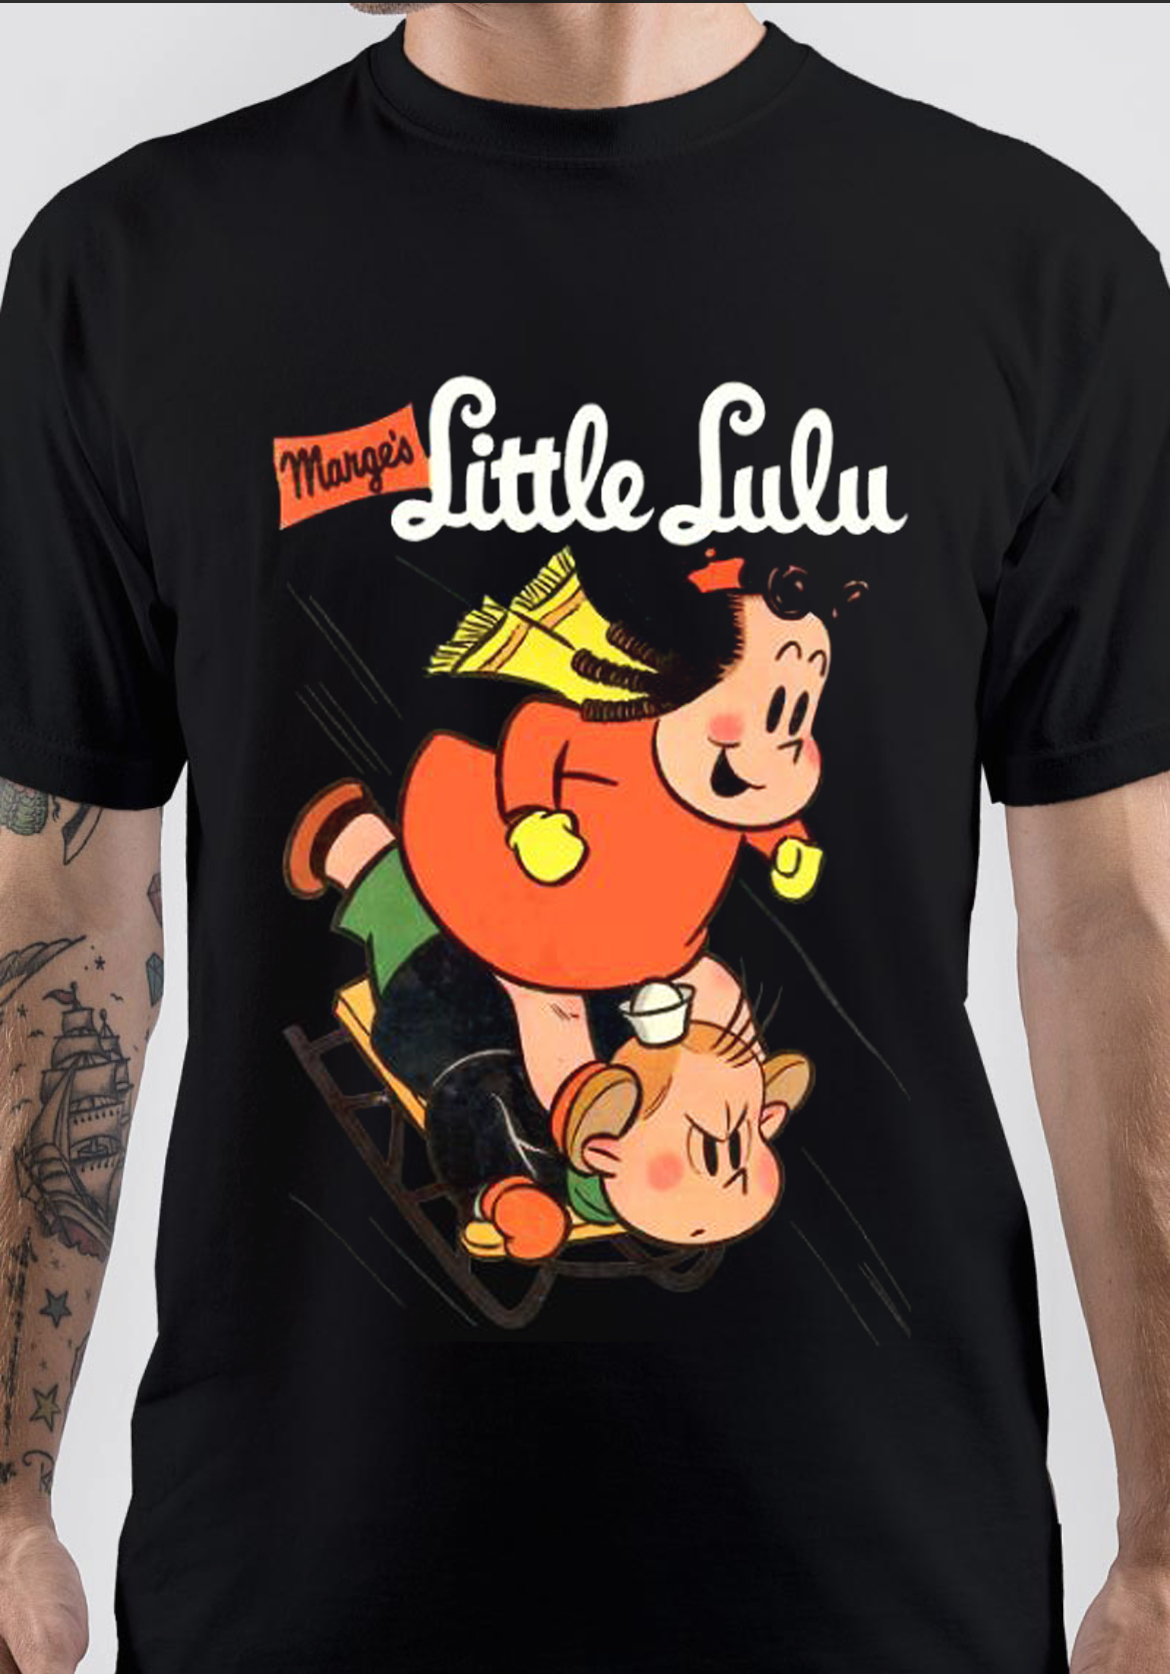 The Little Lulu Show 